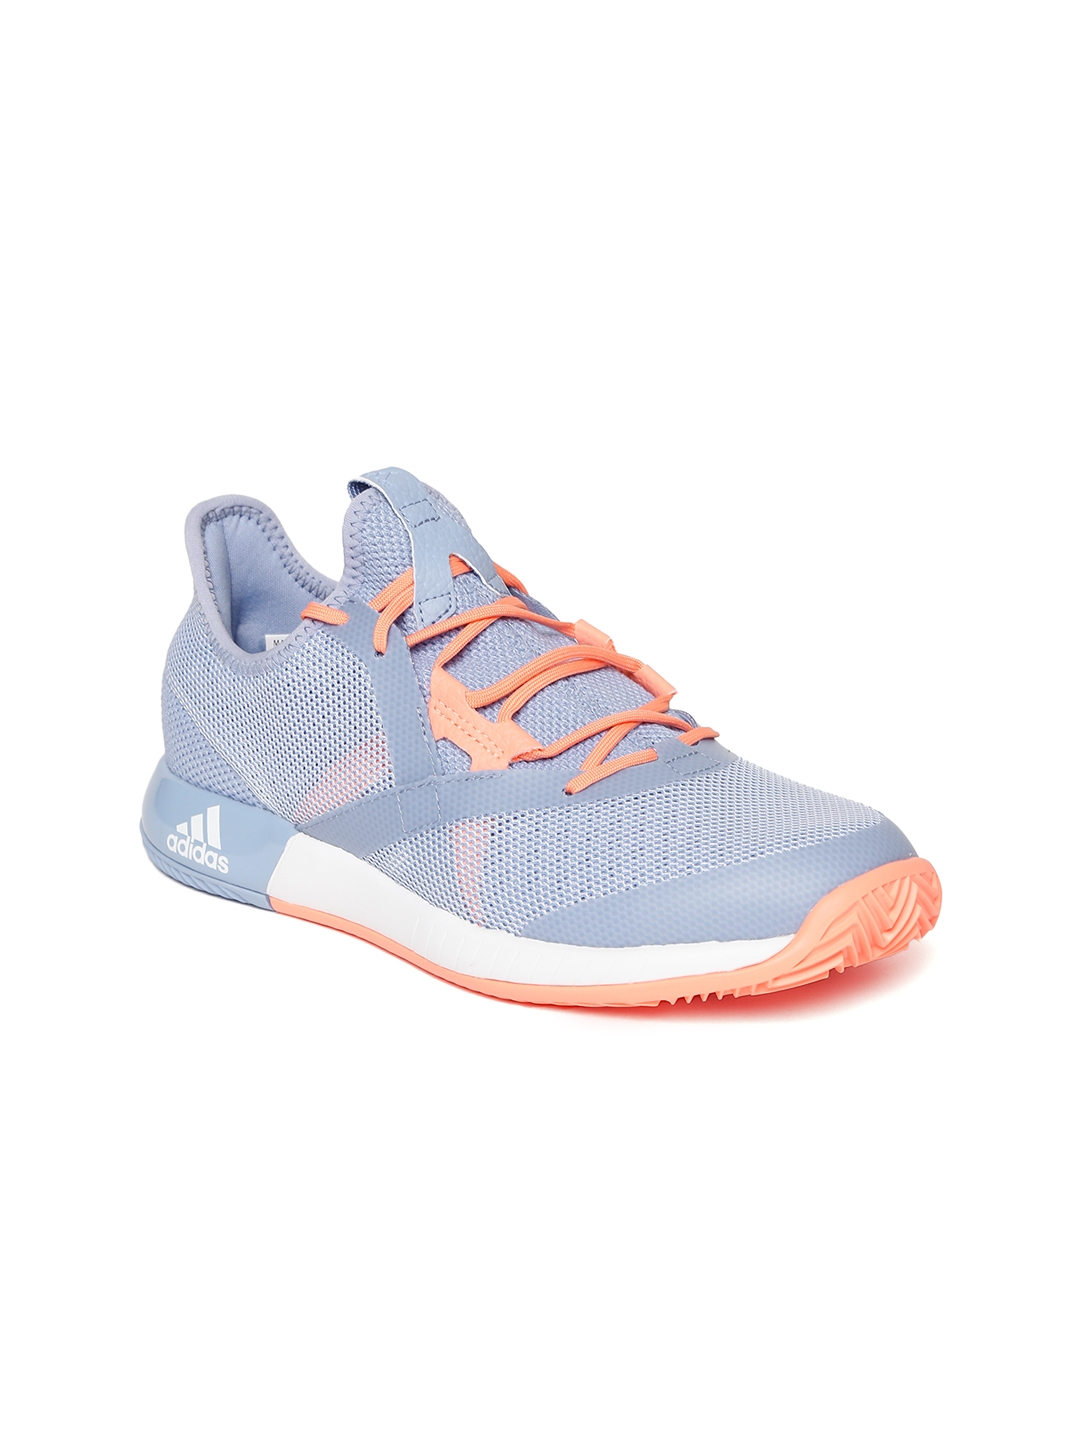 Buy ADIDAS Women Blue ADIZERO DEFIANT BOUNC Tennis Shoes - Sports Shoes ...